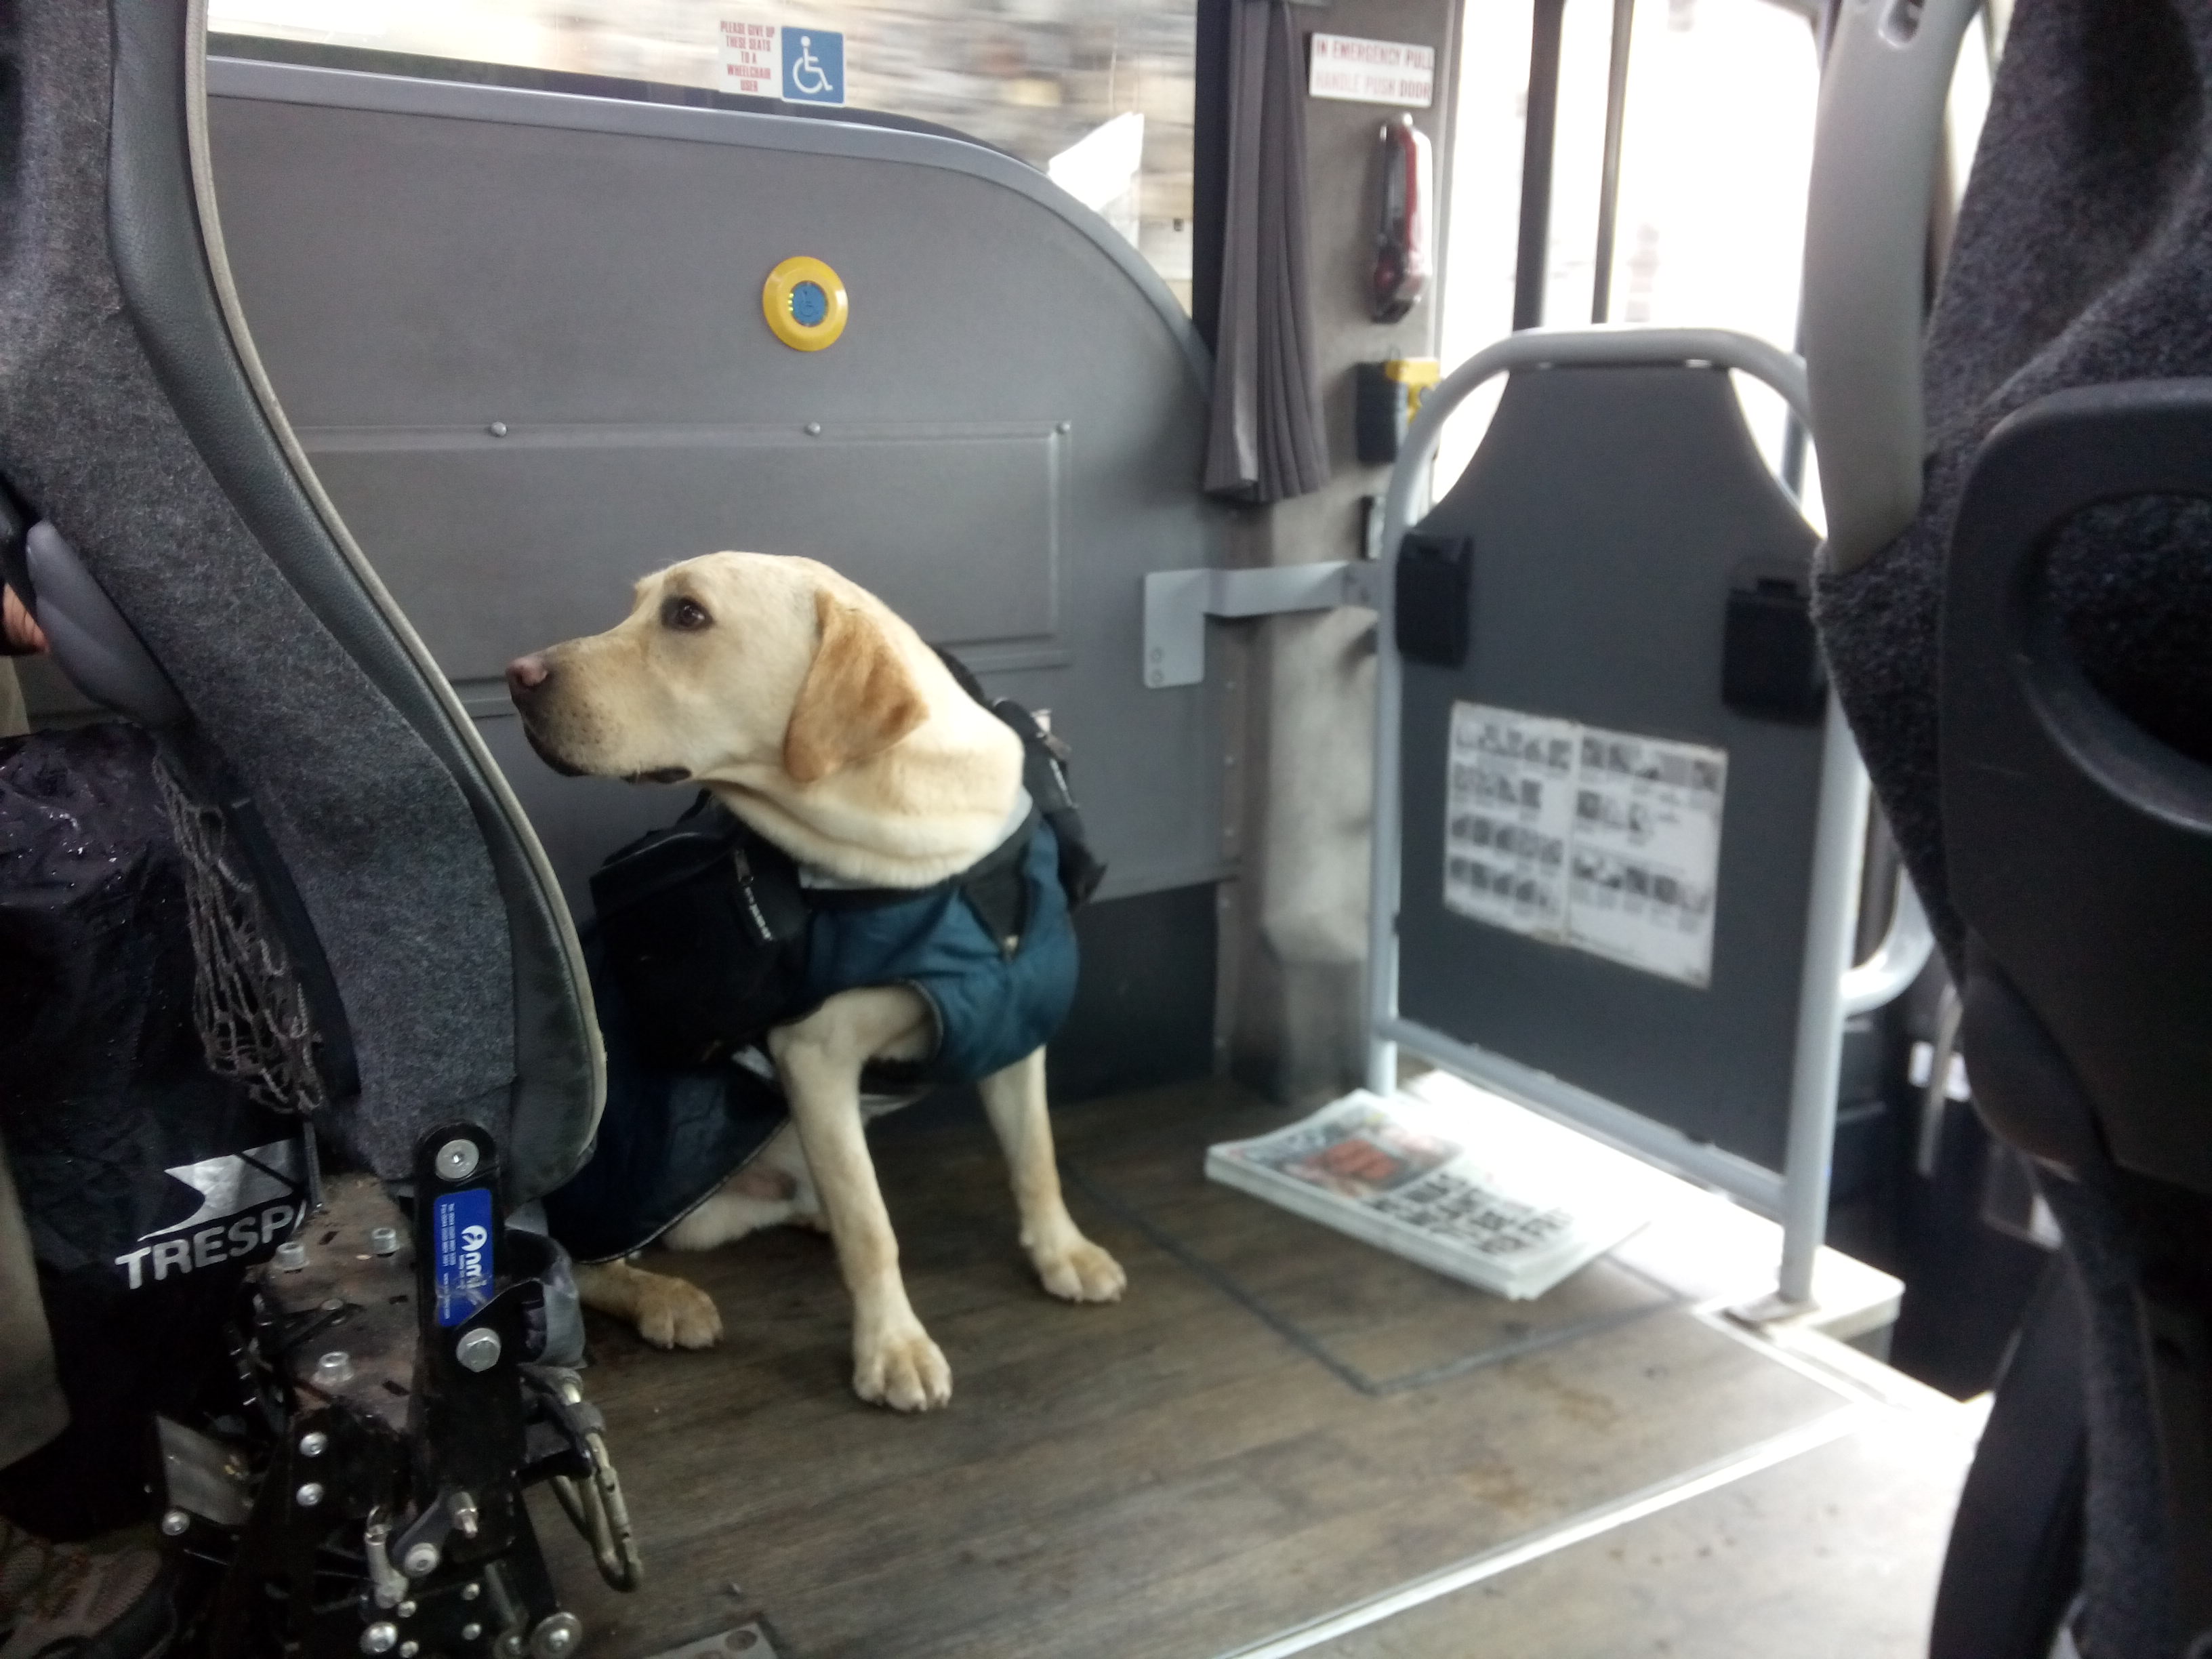 Max sitting on the bus like a Good Boy